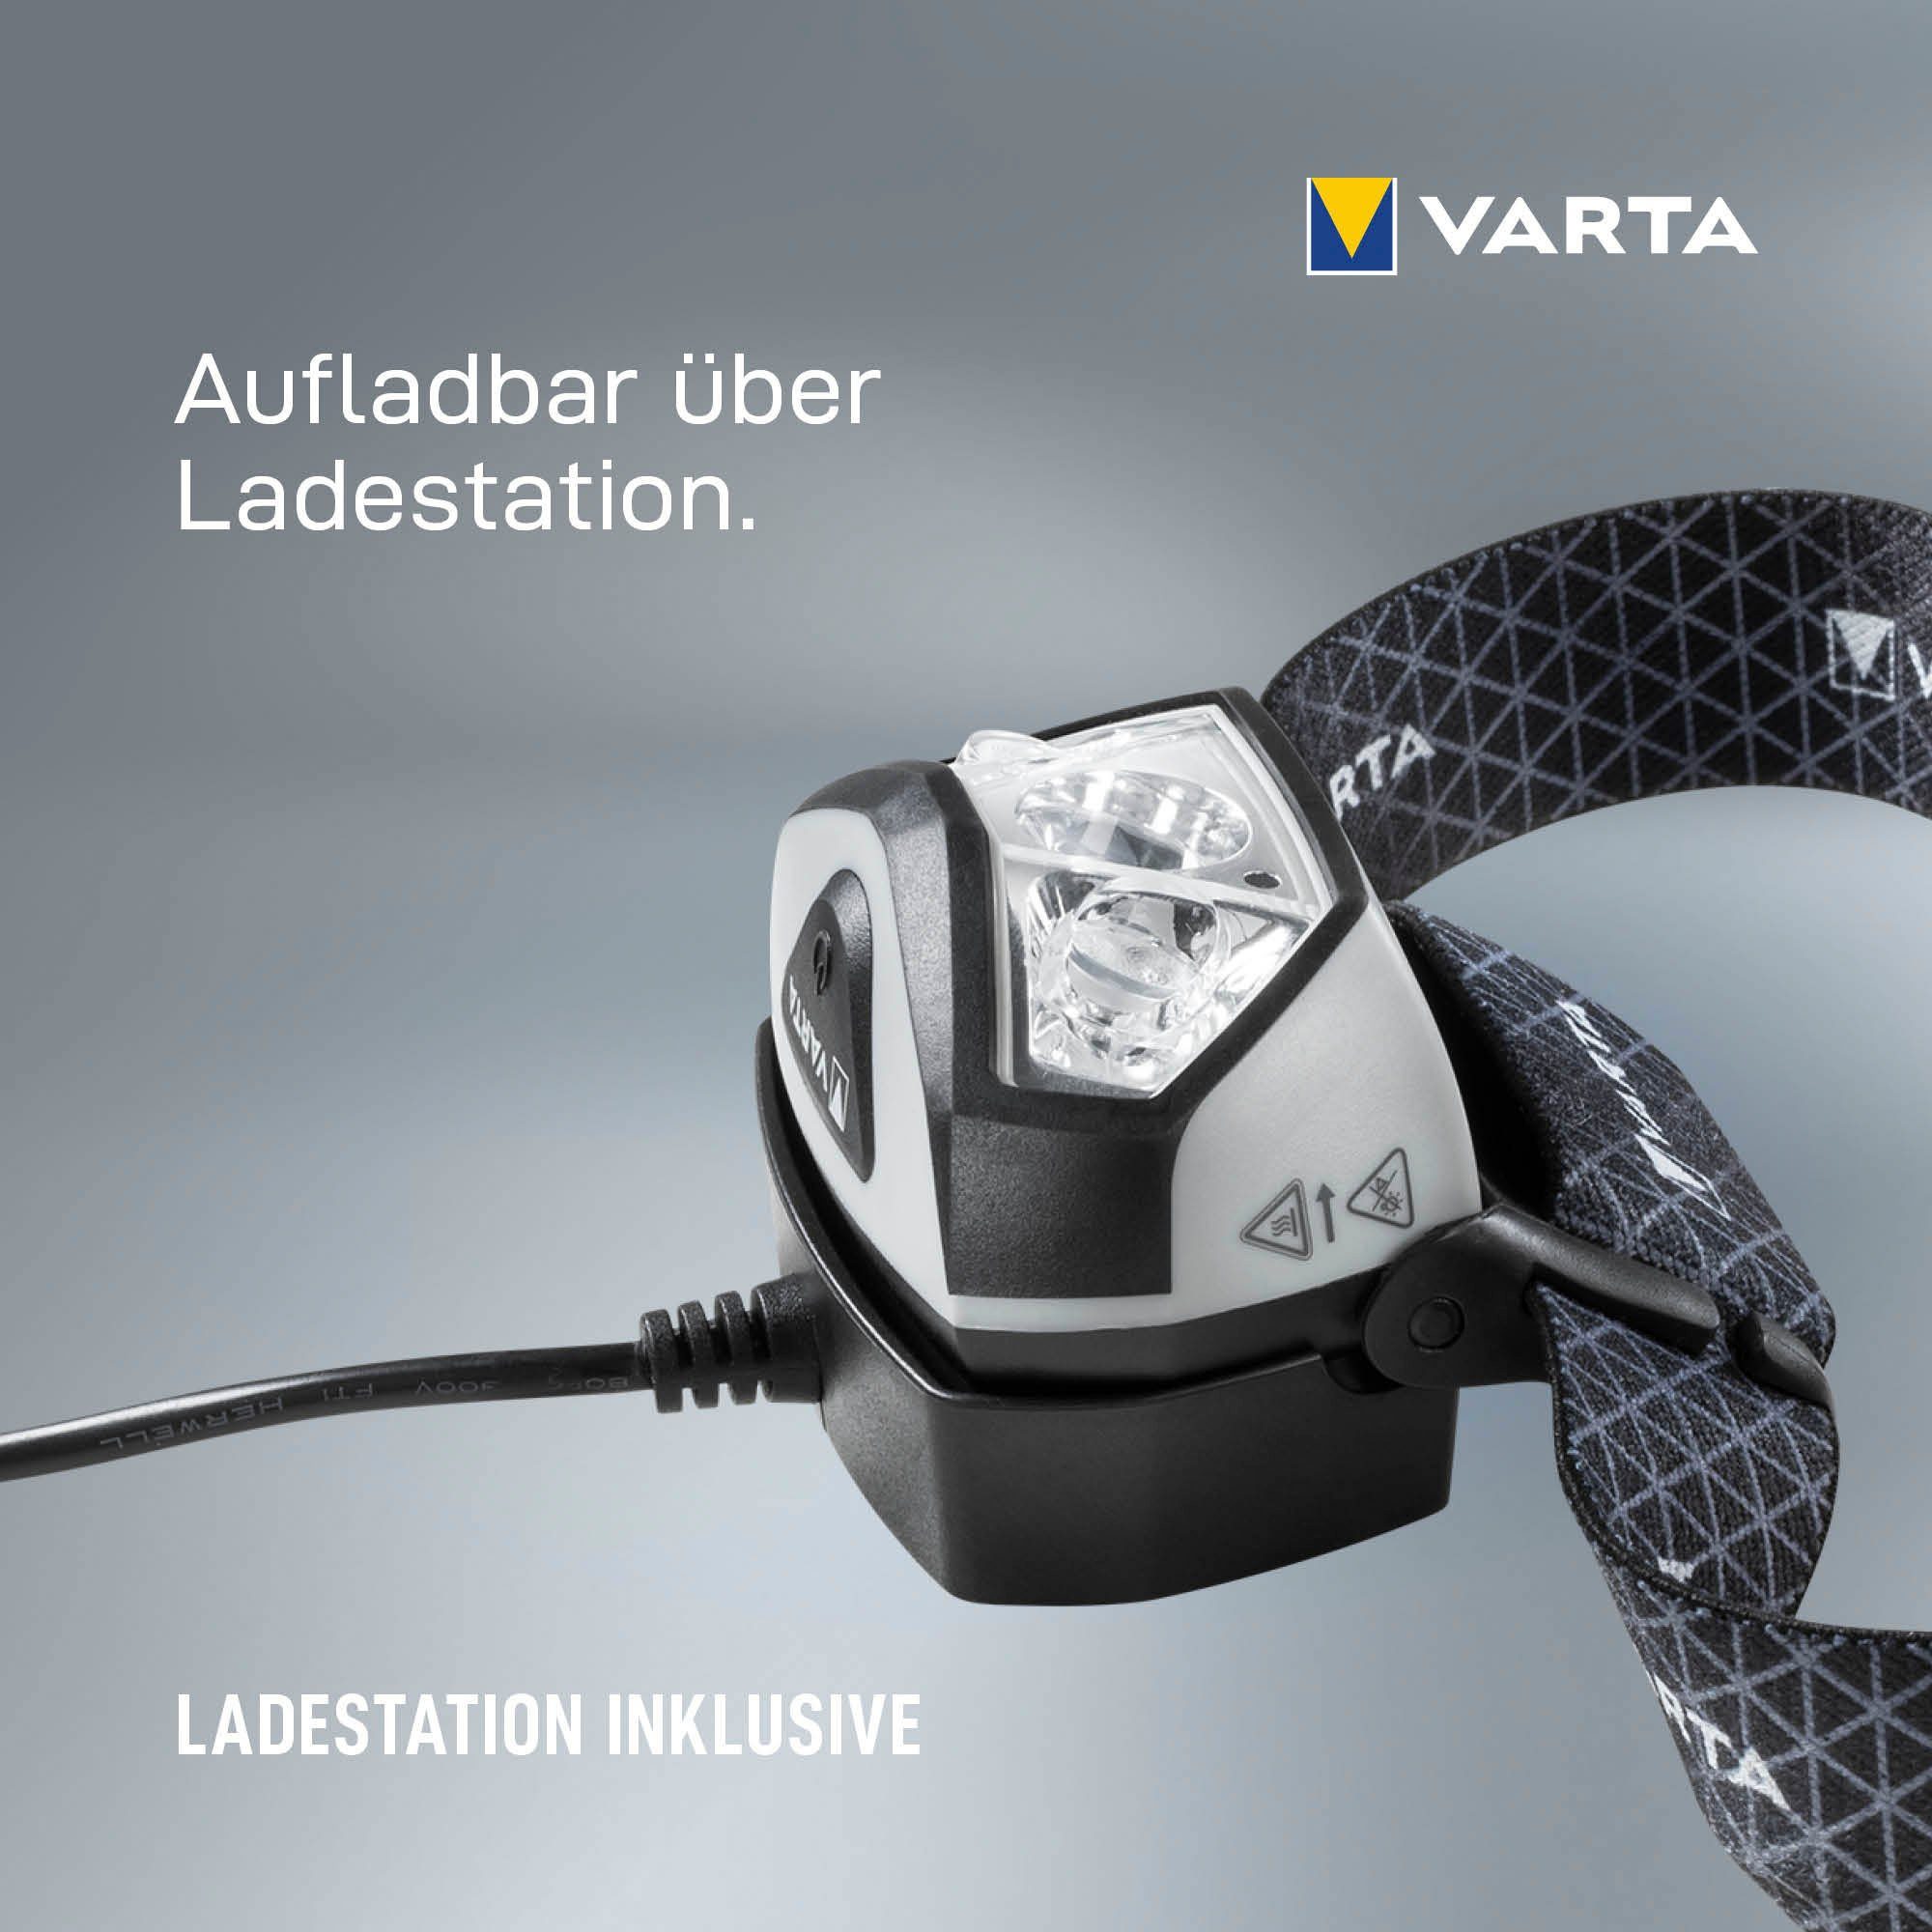 VARTA Kopflampe Outdoor Sports mit Pro Akku Wireless H30R